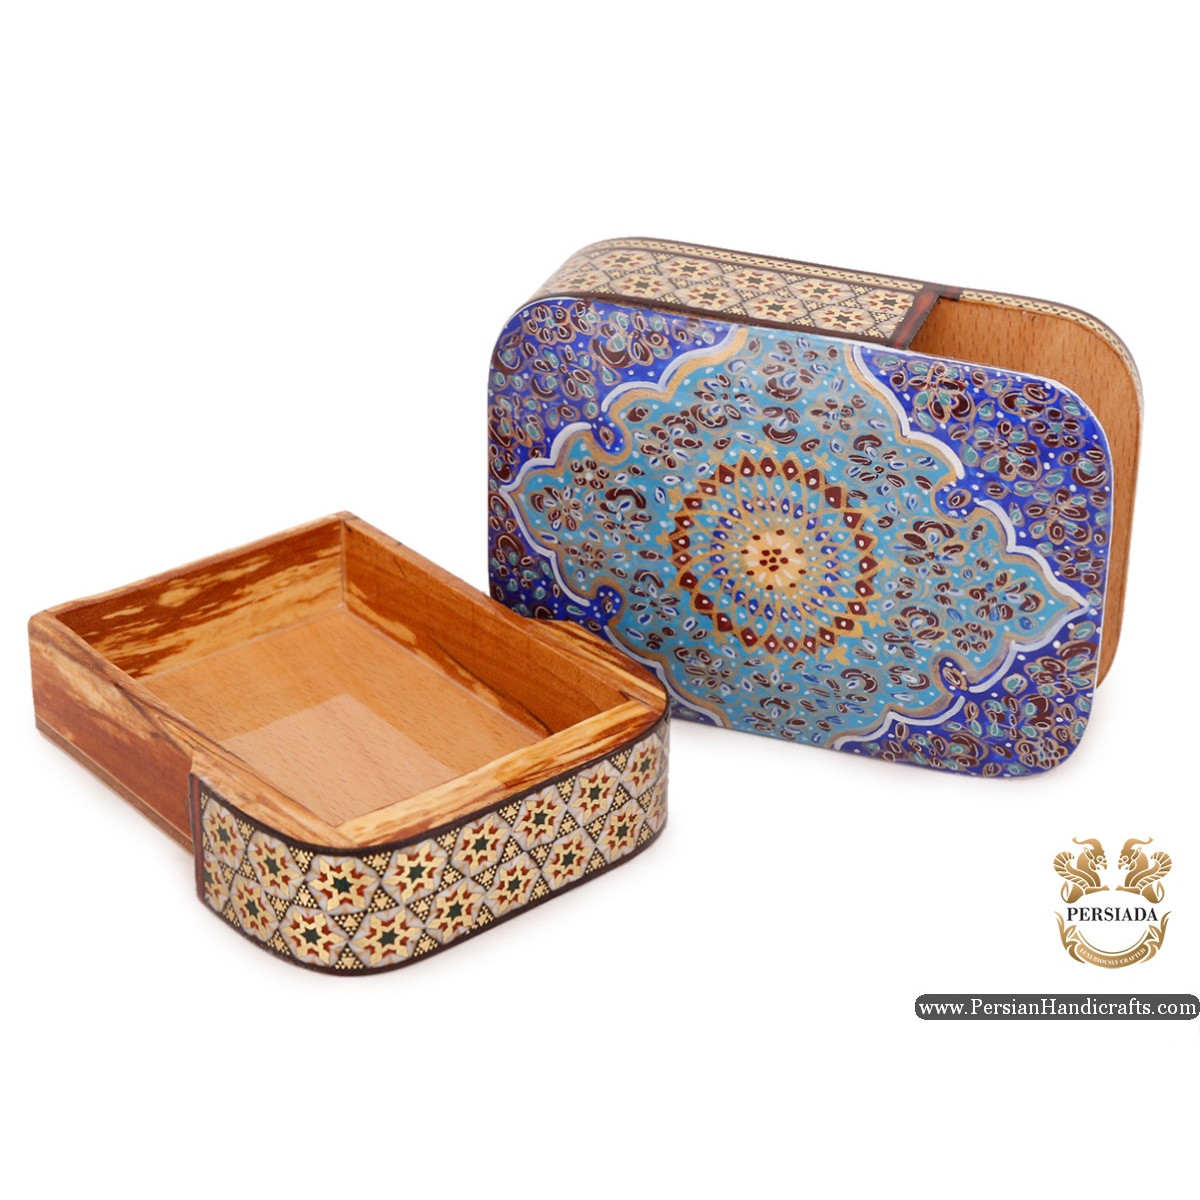 Slide in Box | Miniature Khatam Marquetry | Persiada HKH6105